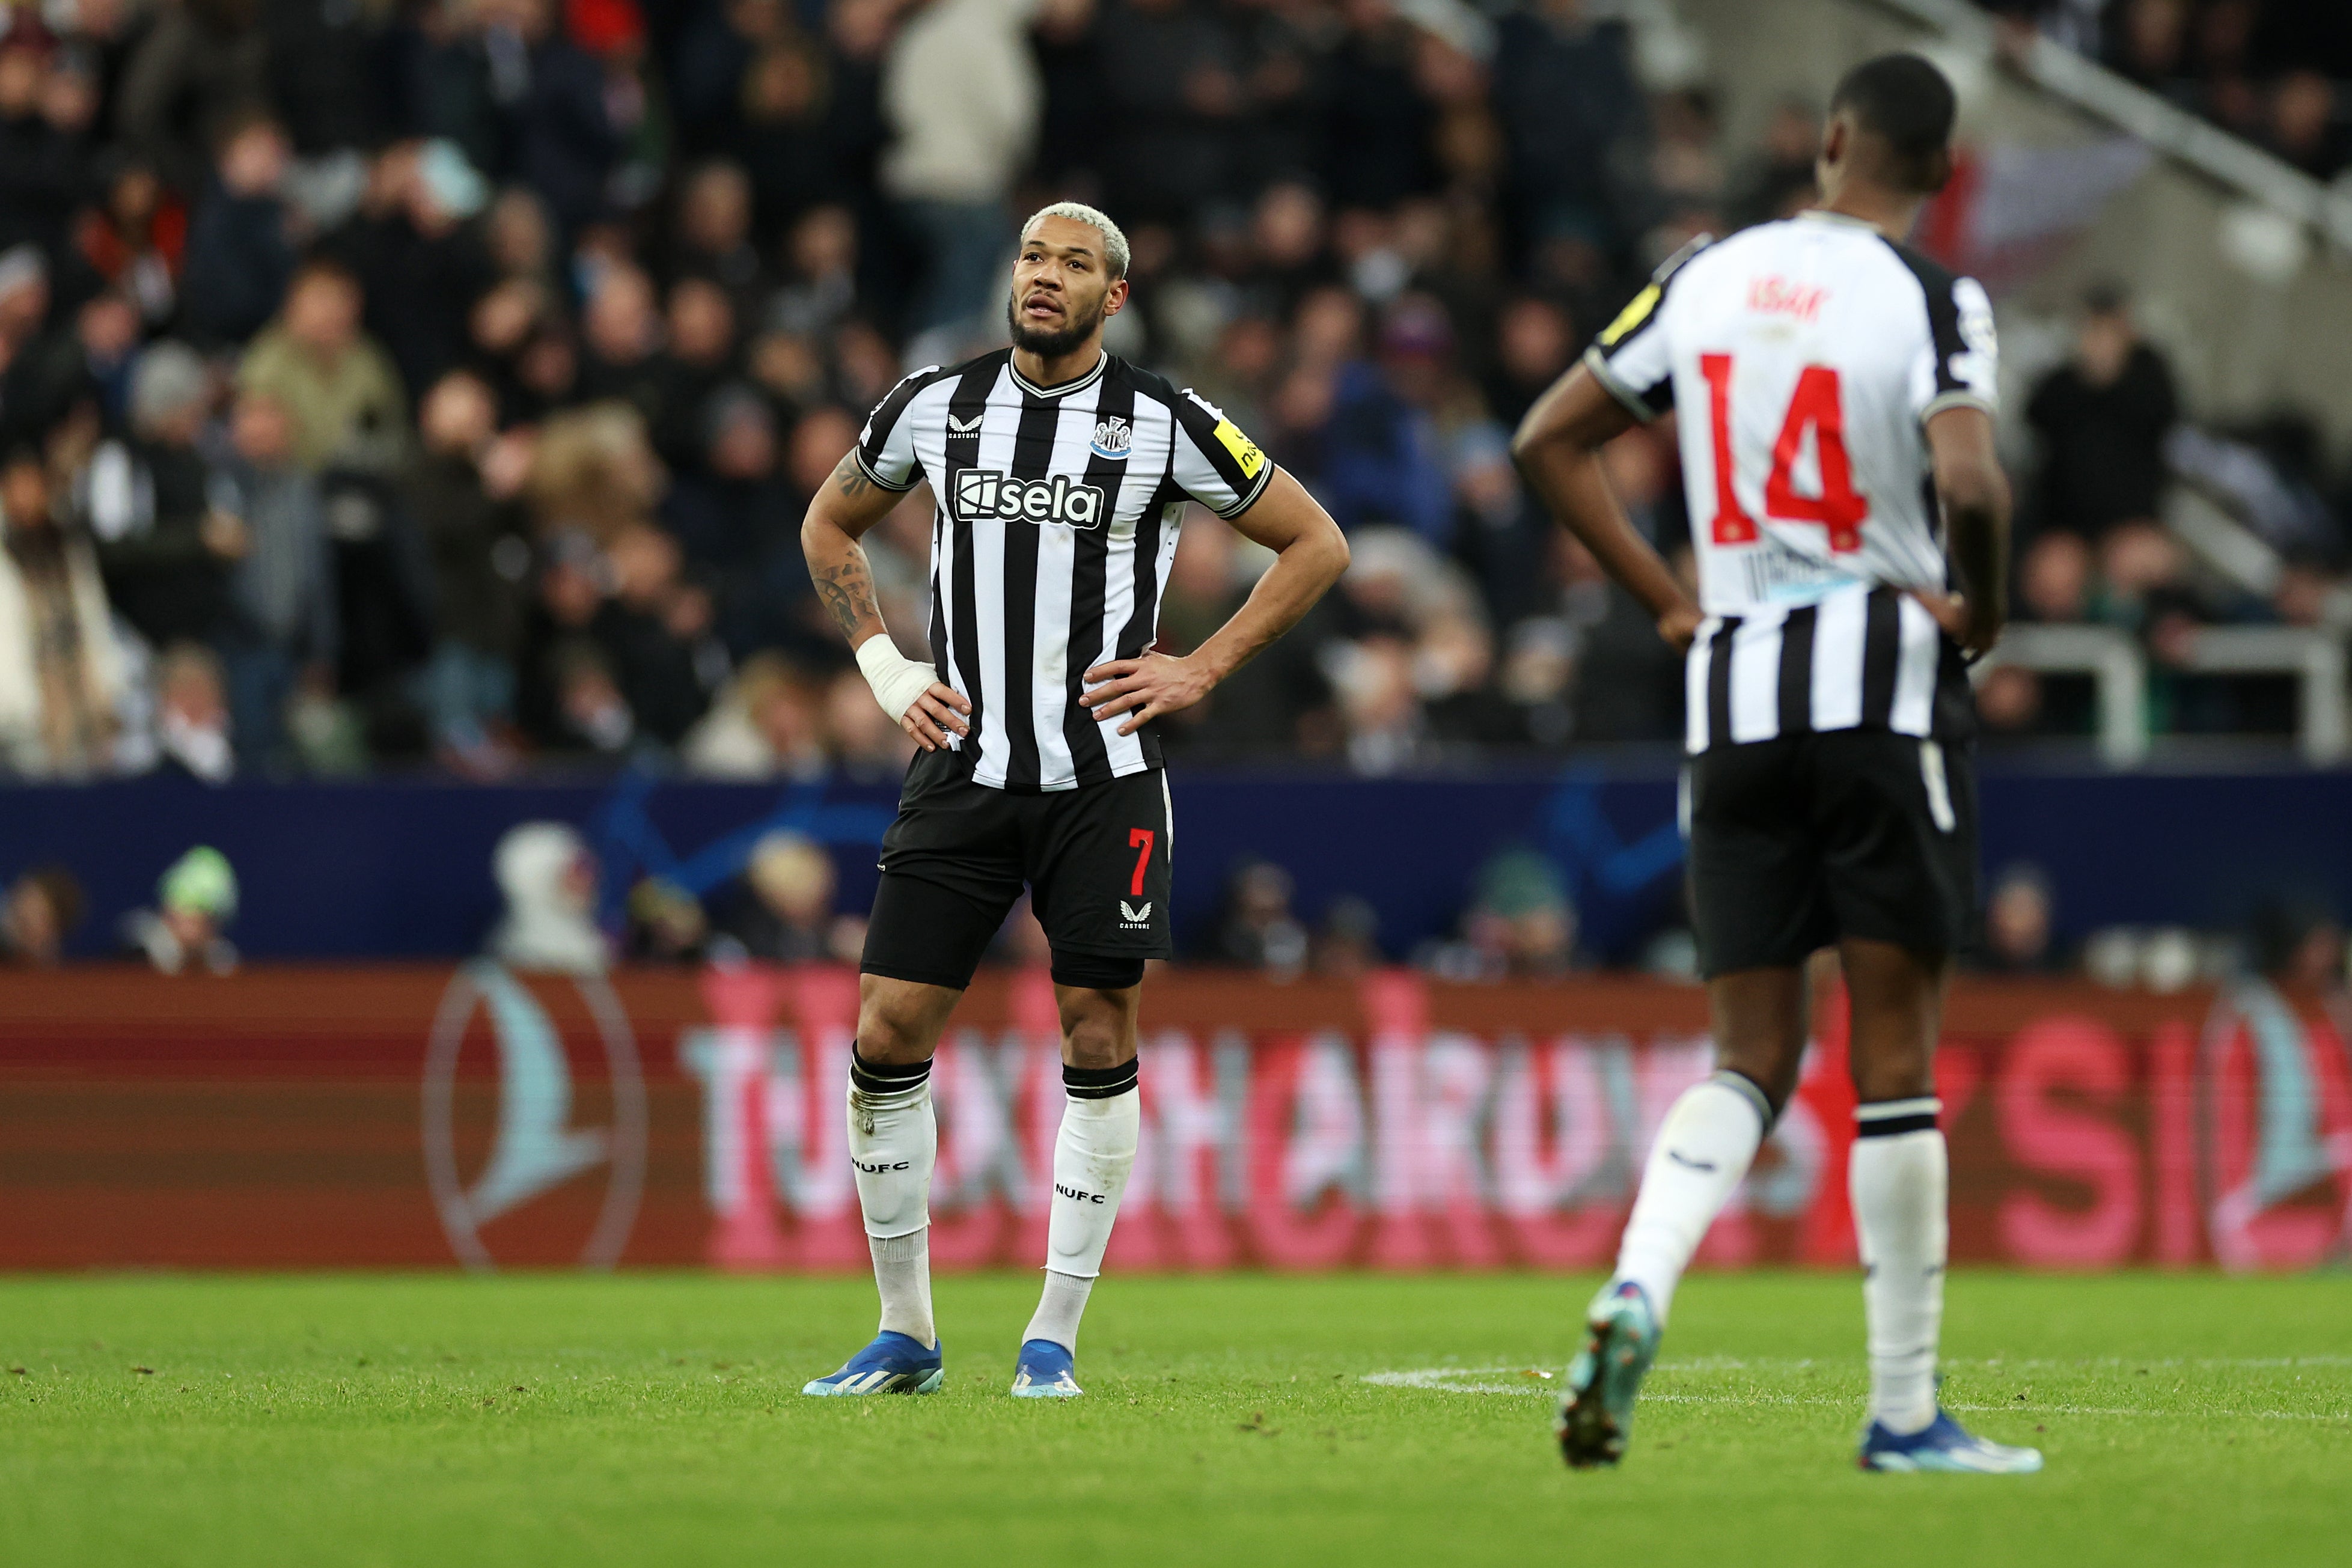 Newcastle saw their European dreams slip away